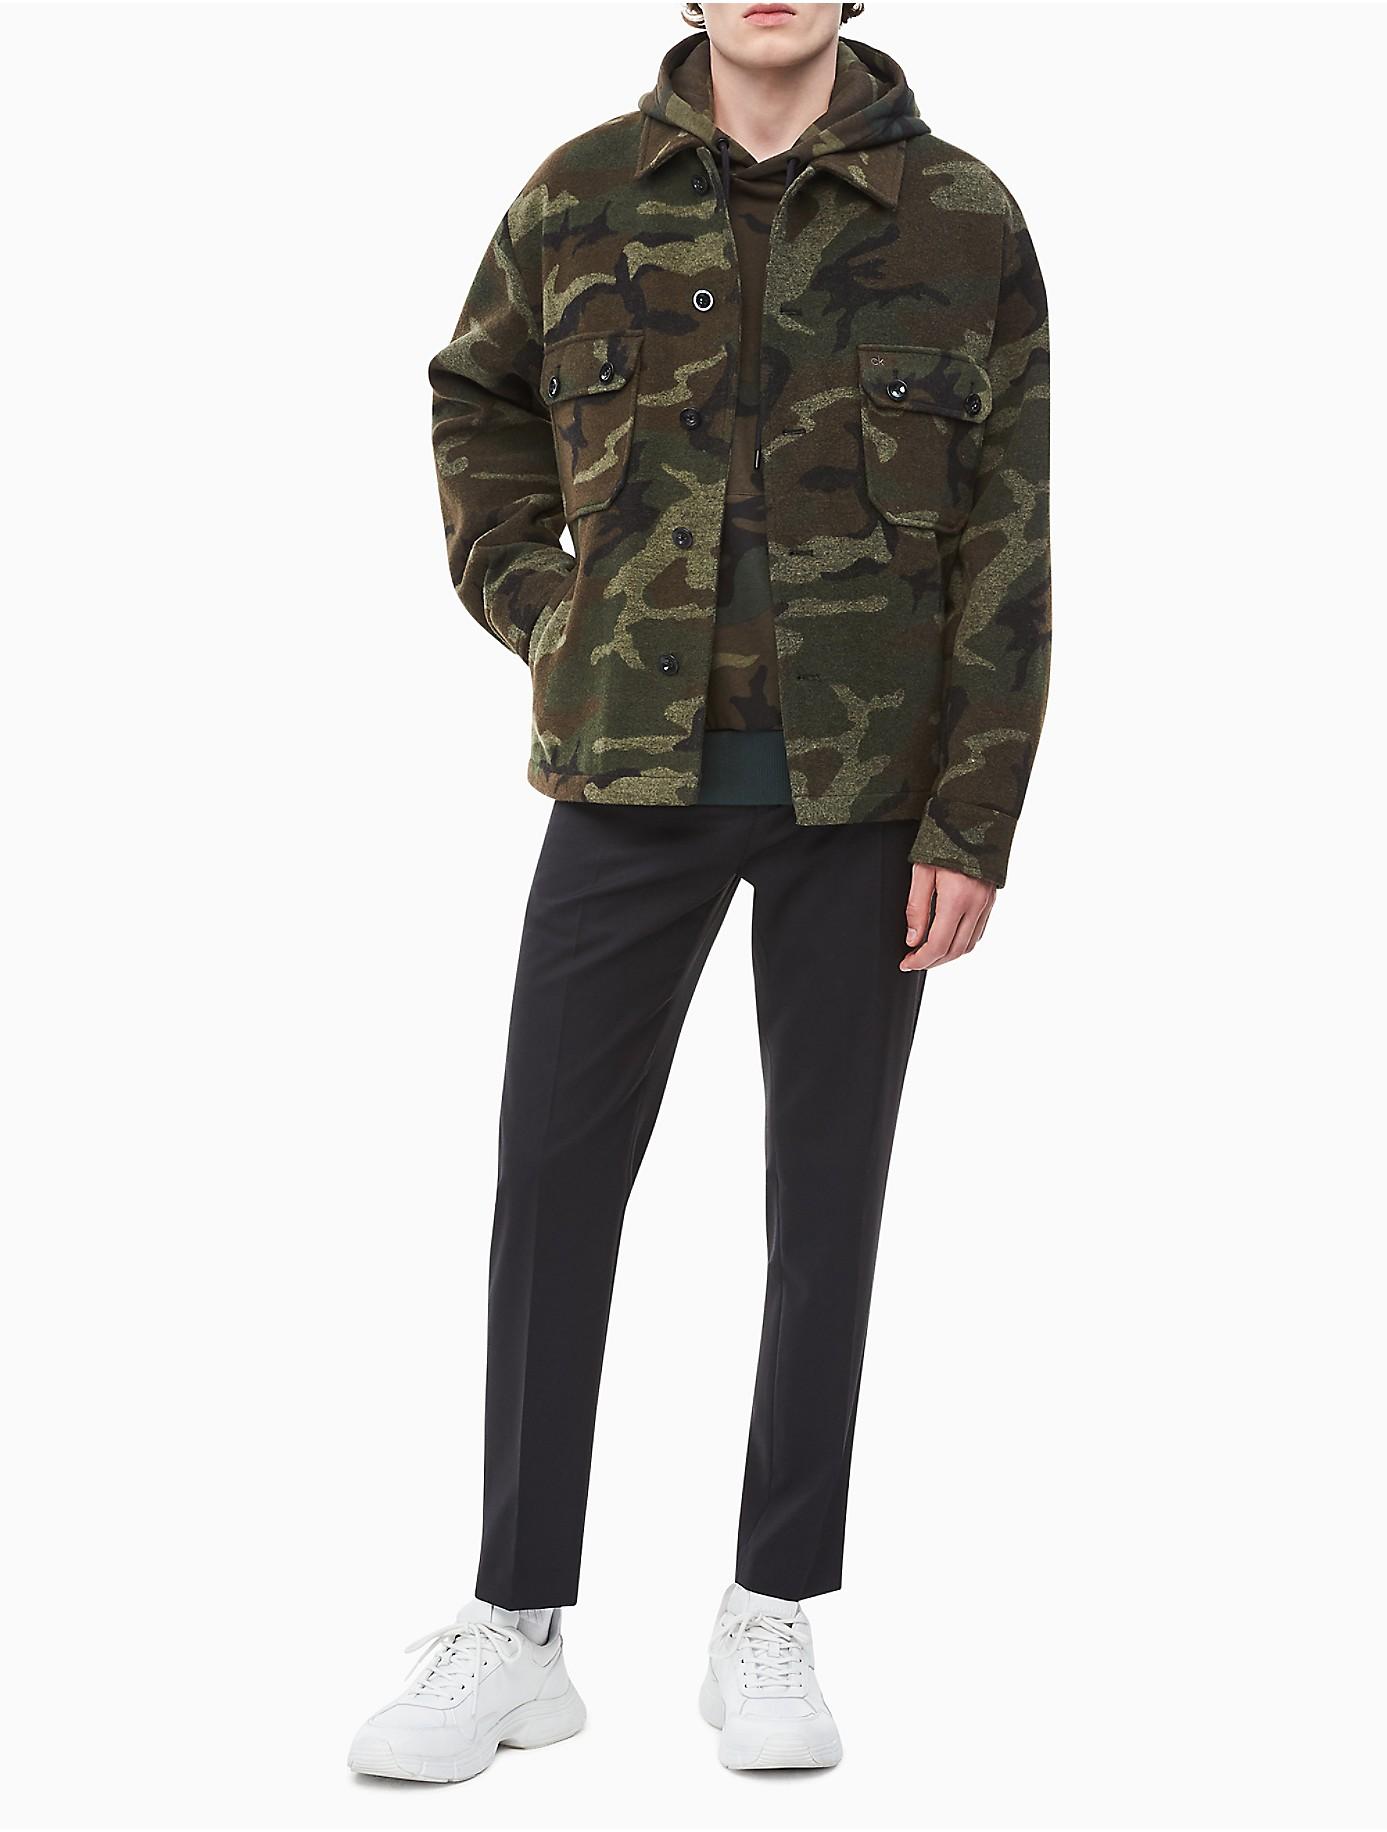 Calvin Klein Wool Blend Camo Shirt Jacket in Camouflage (Green) for Men -  Lyst